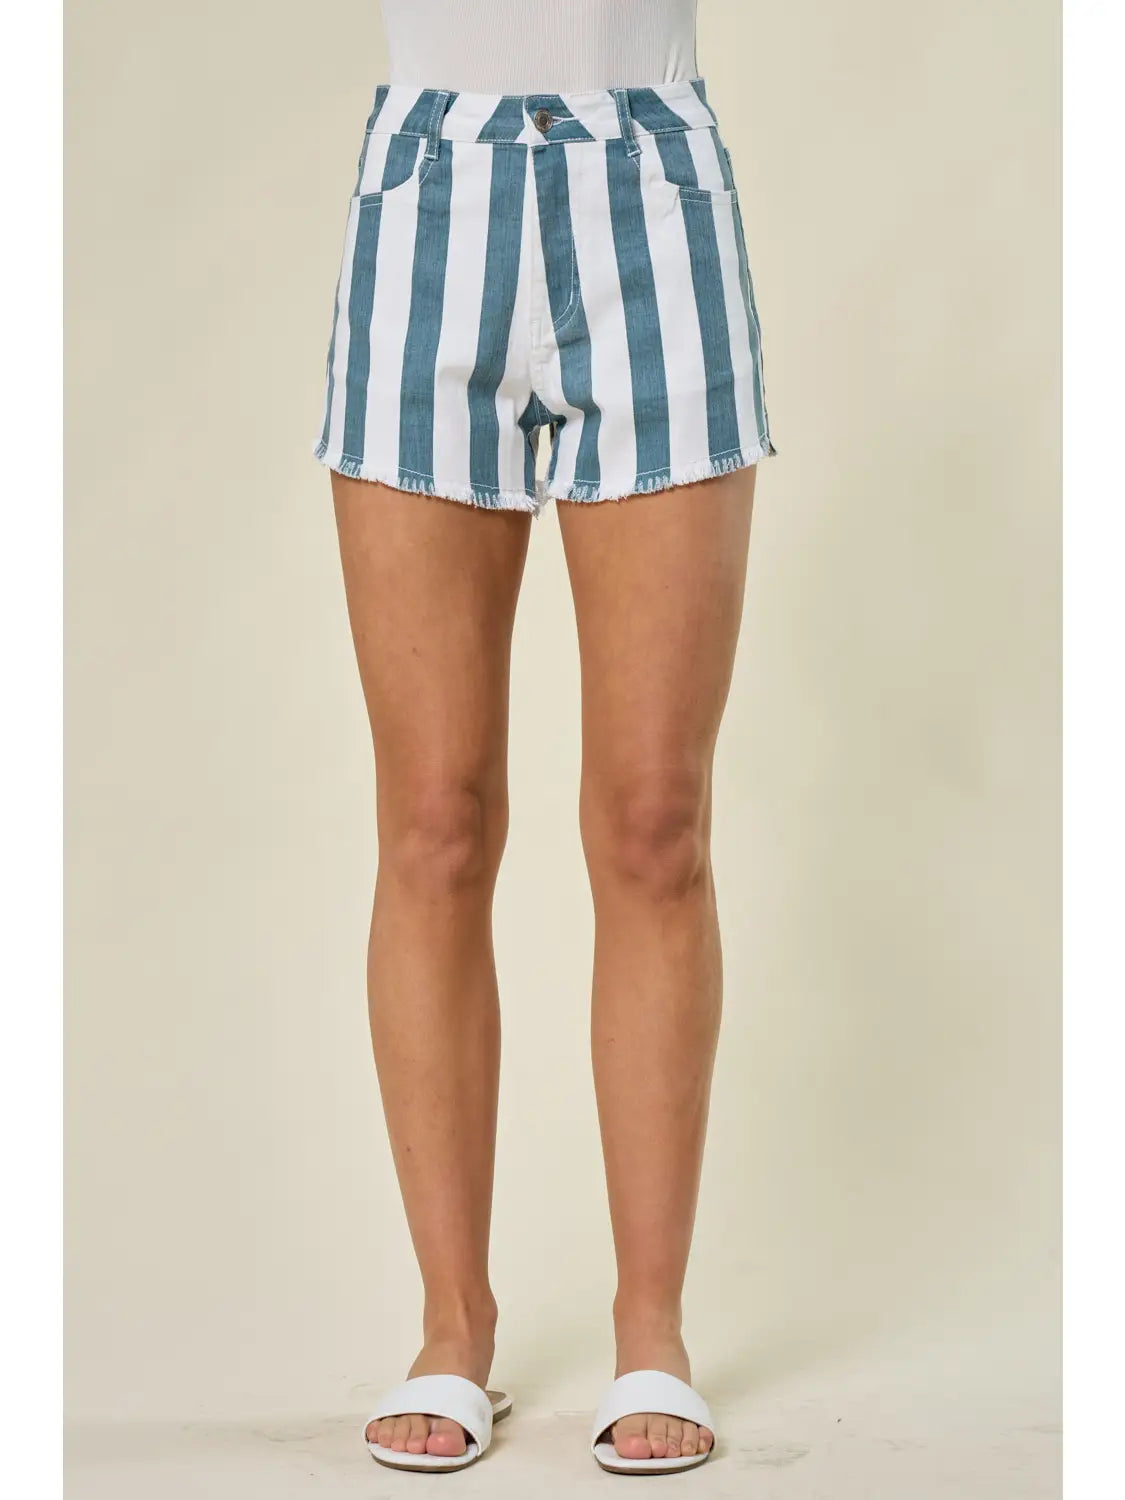 Deep Teal Striped Print Shorts